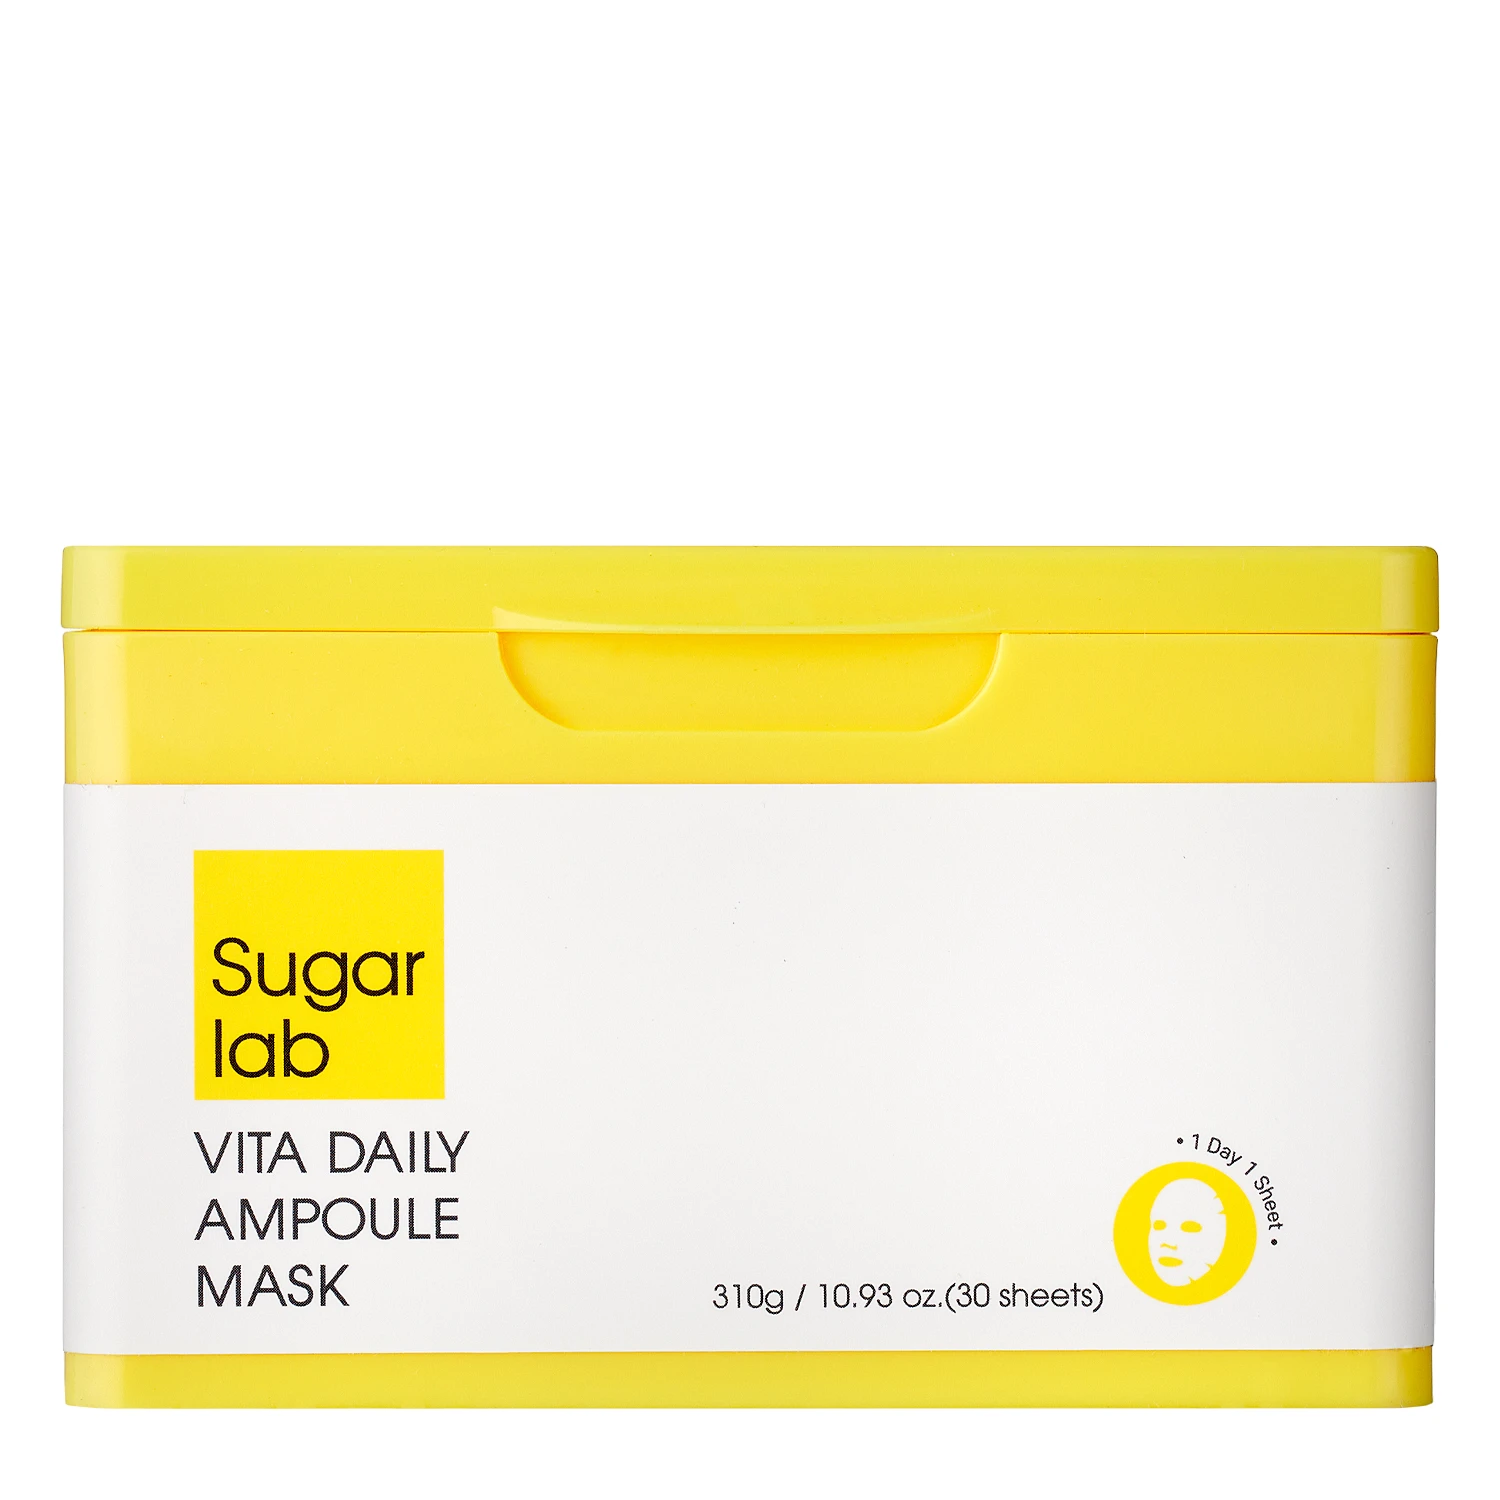 G9Skin - Sugar Lab Vita Daily Ampoule Mask - Набір освітлювальних тканинних масок - 30шт./310g